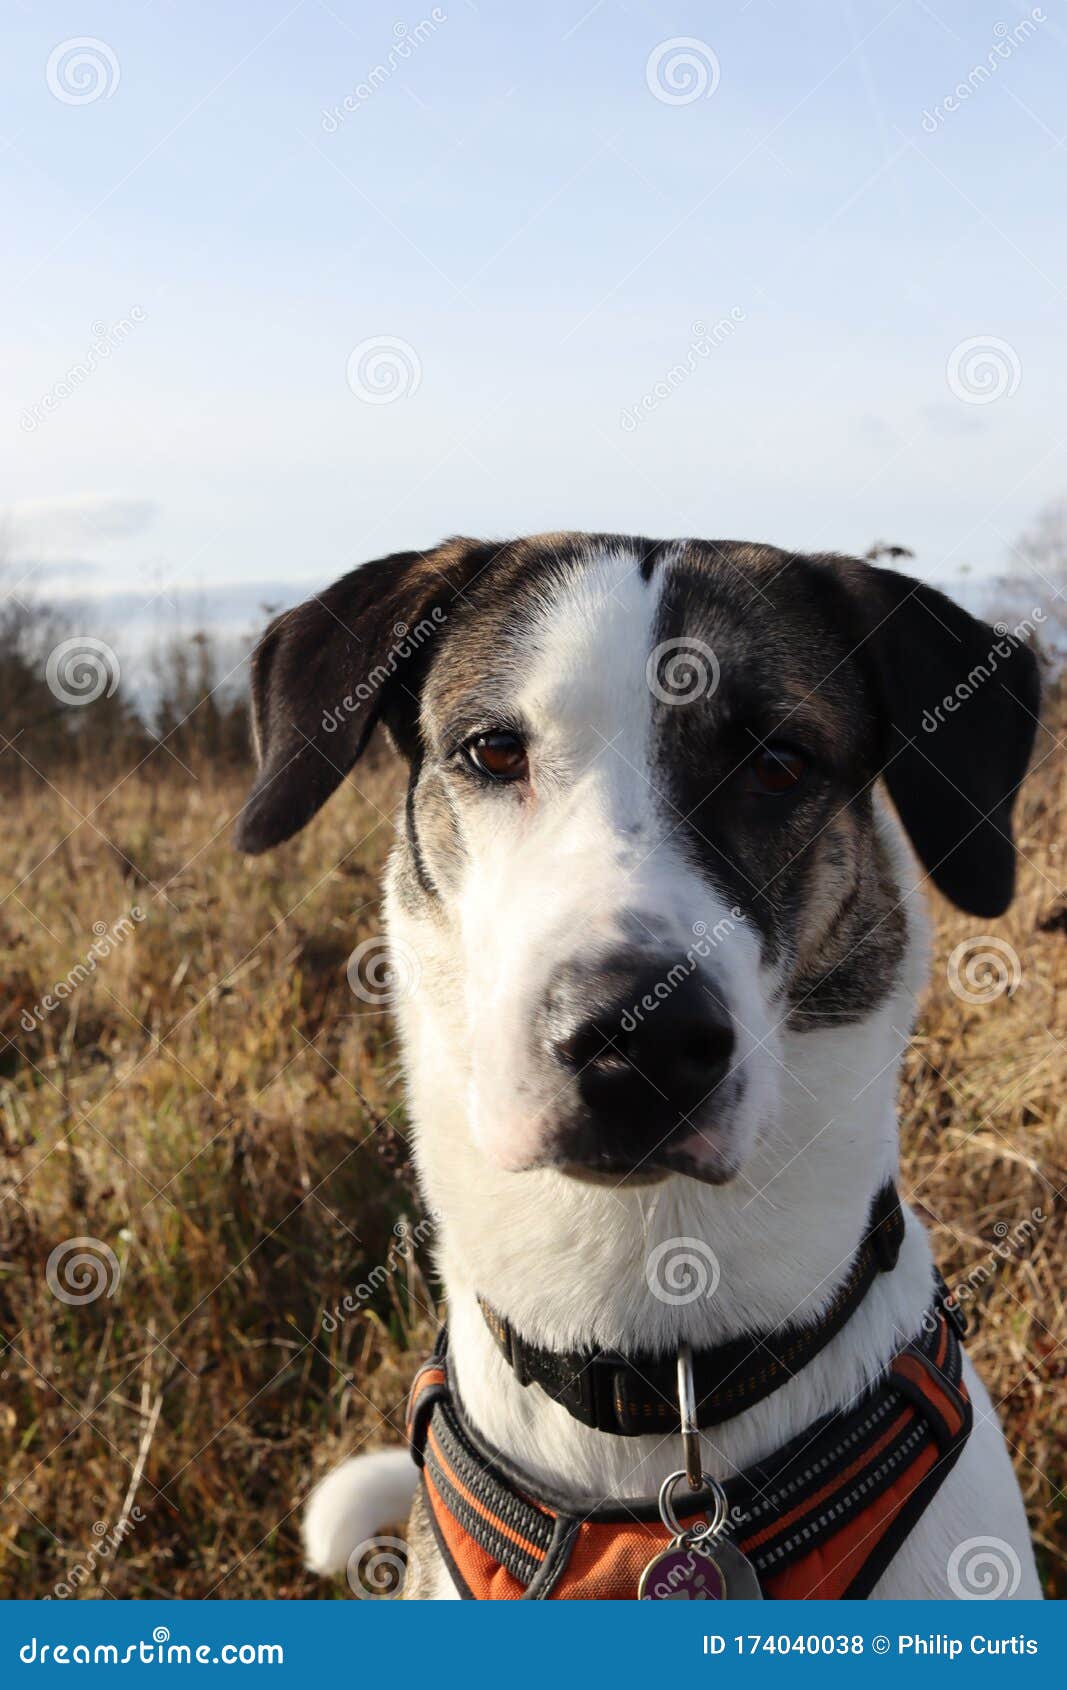 Breed Dog Husky Kangal German Shepard Stock Photo - Image of cute, contest: 174040038